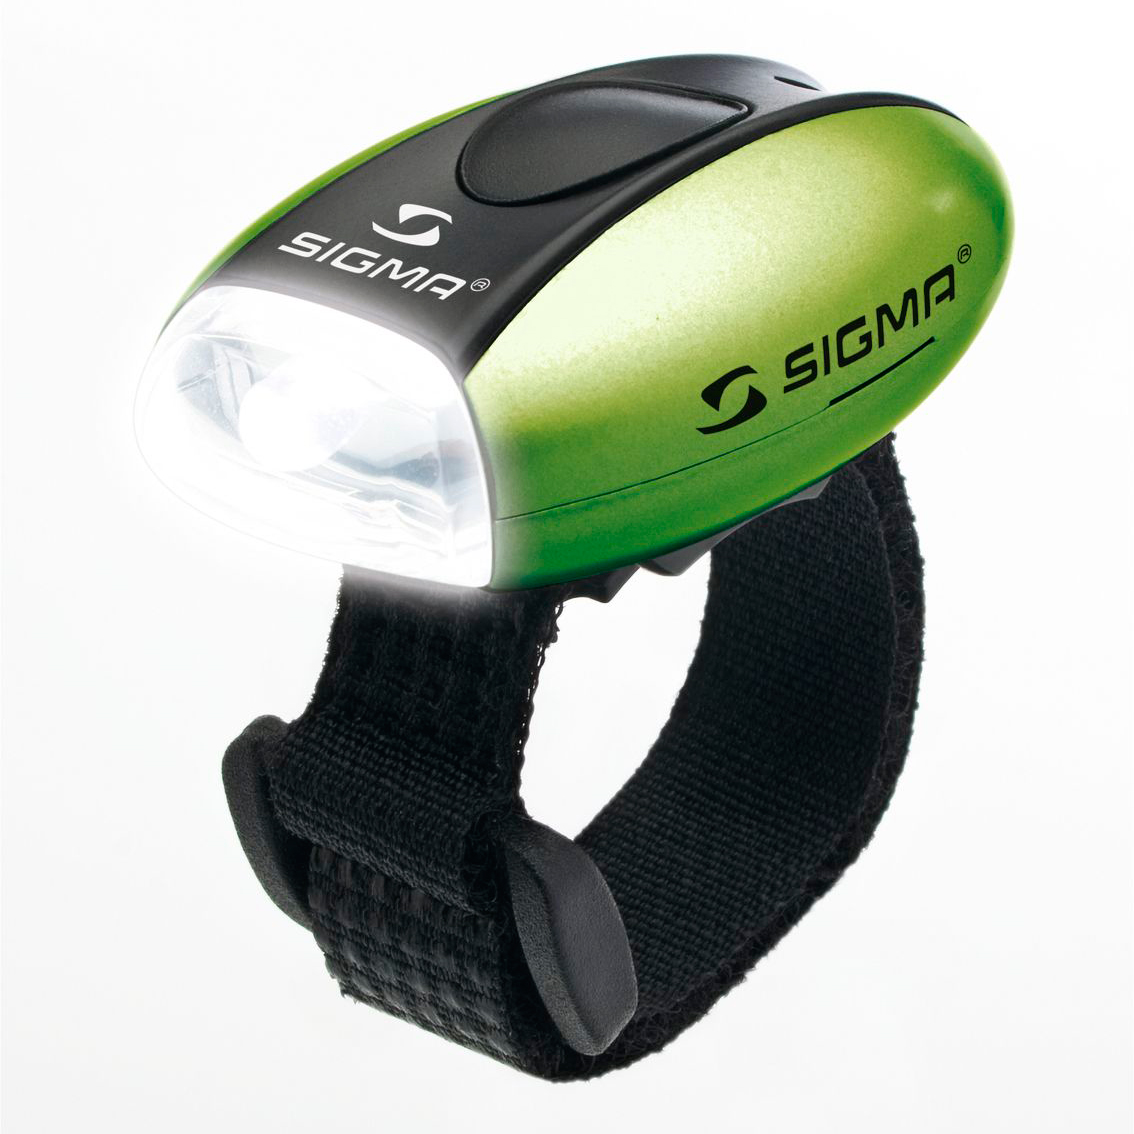 Sigma micro. Велофонарь Sigma Micro 17234. Фонарик для велосипеда Sigma Micro. Передний велосипедный фонарь Сигма. Фонарик Сигма микро на руль.